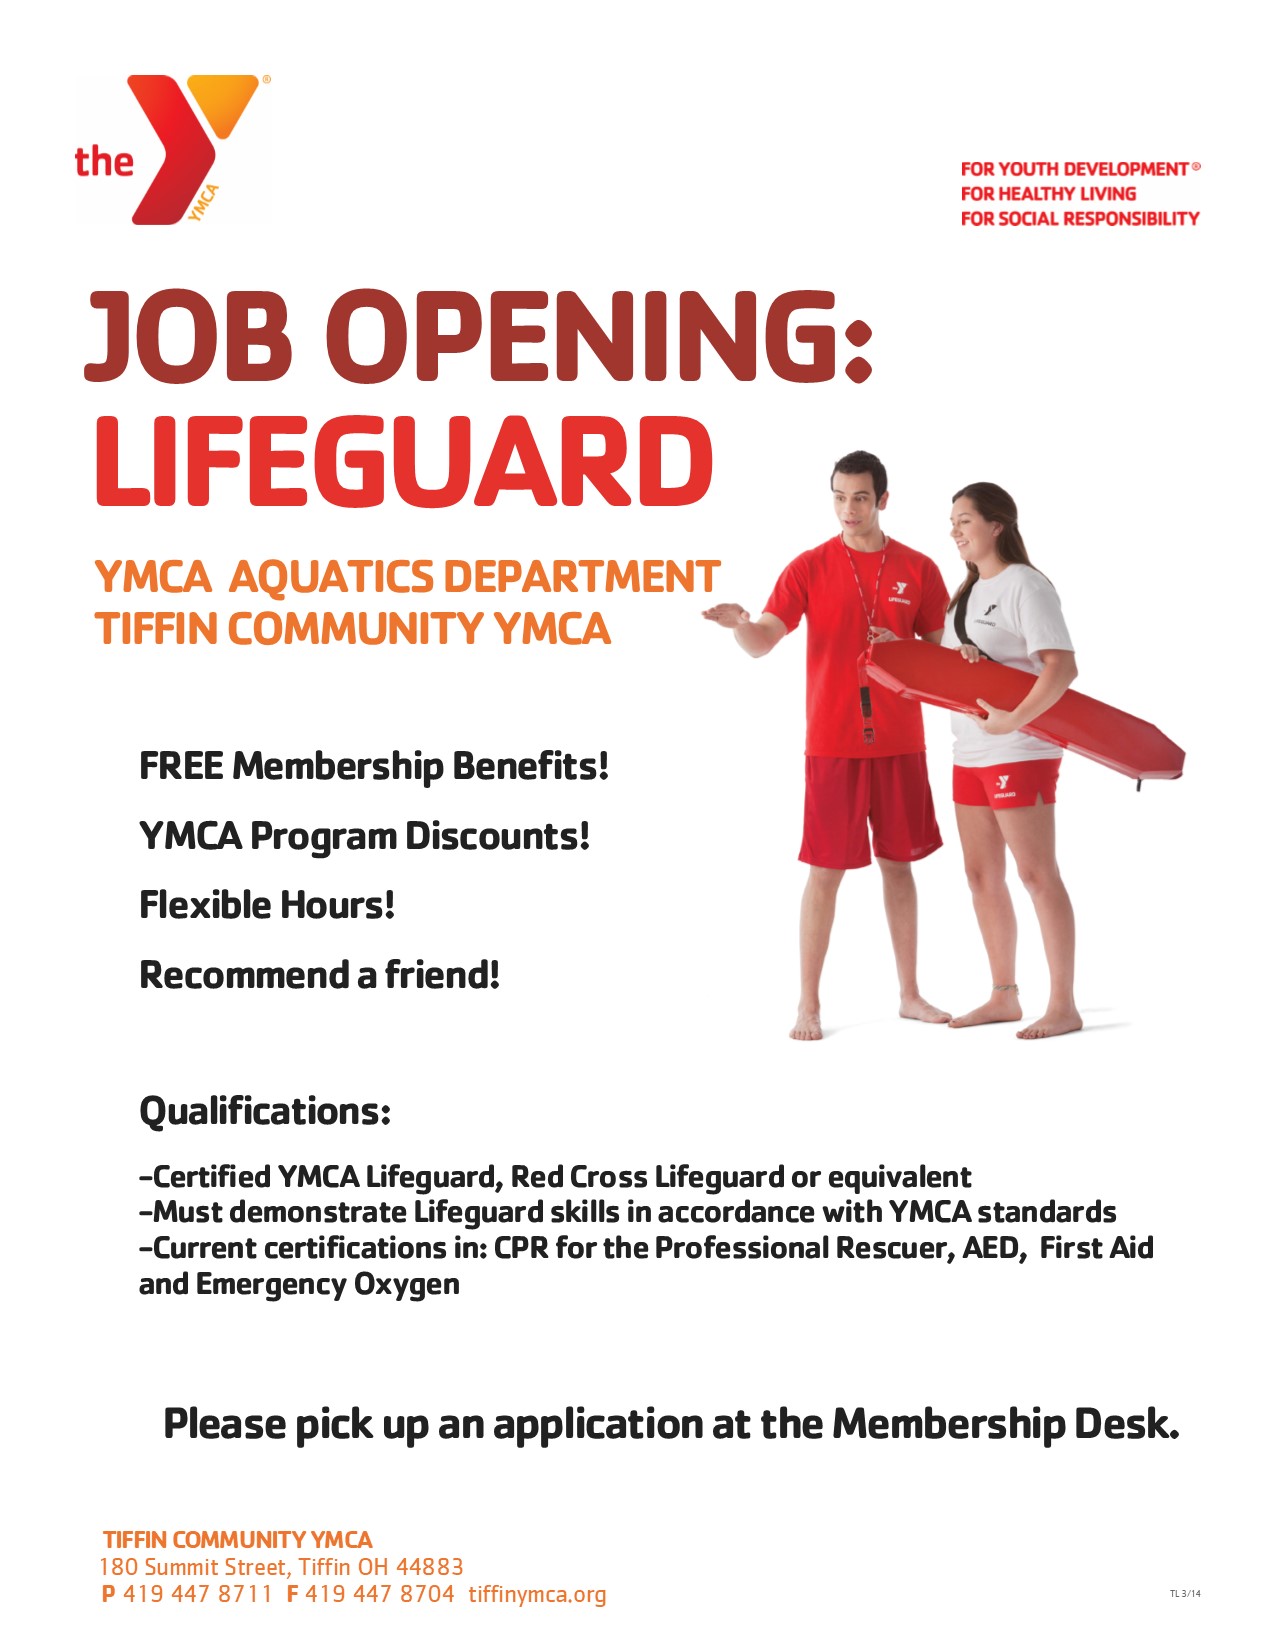 lifeguard job description ymca - Veola Lovelace